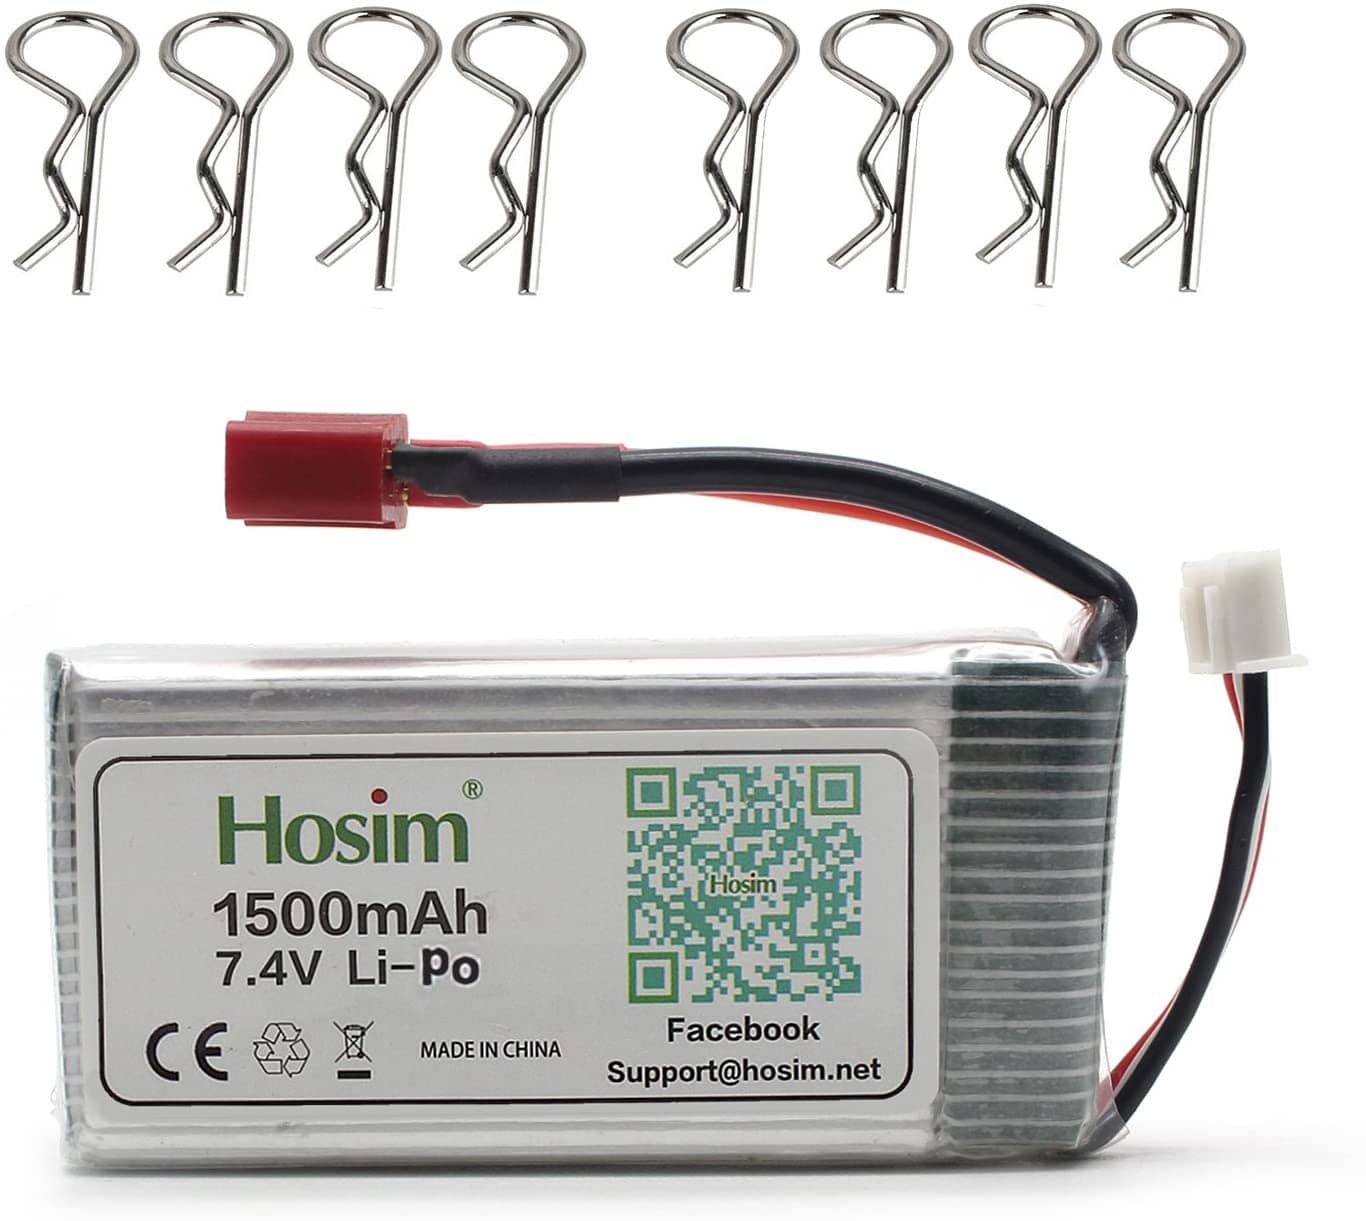 Hosim 7.4V 1500mAh 25C LiPo Battery Pack T Connector for RC Car + Shell Pin